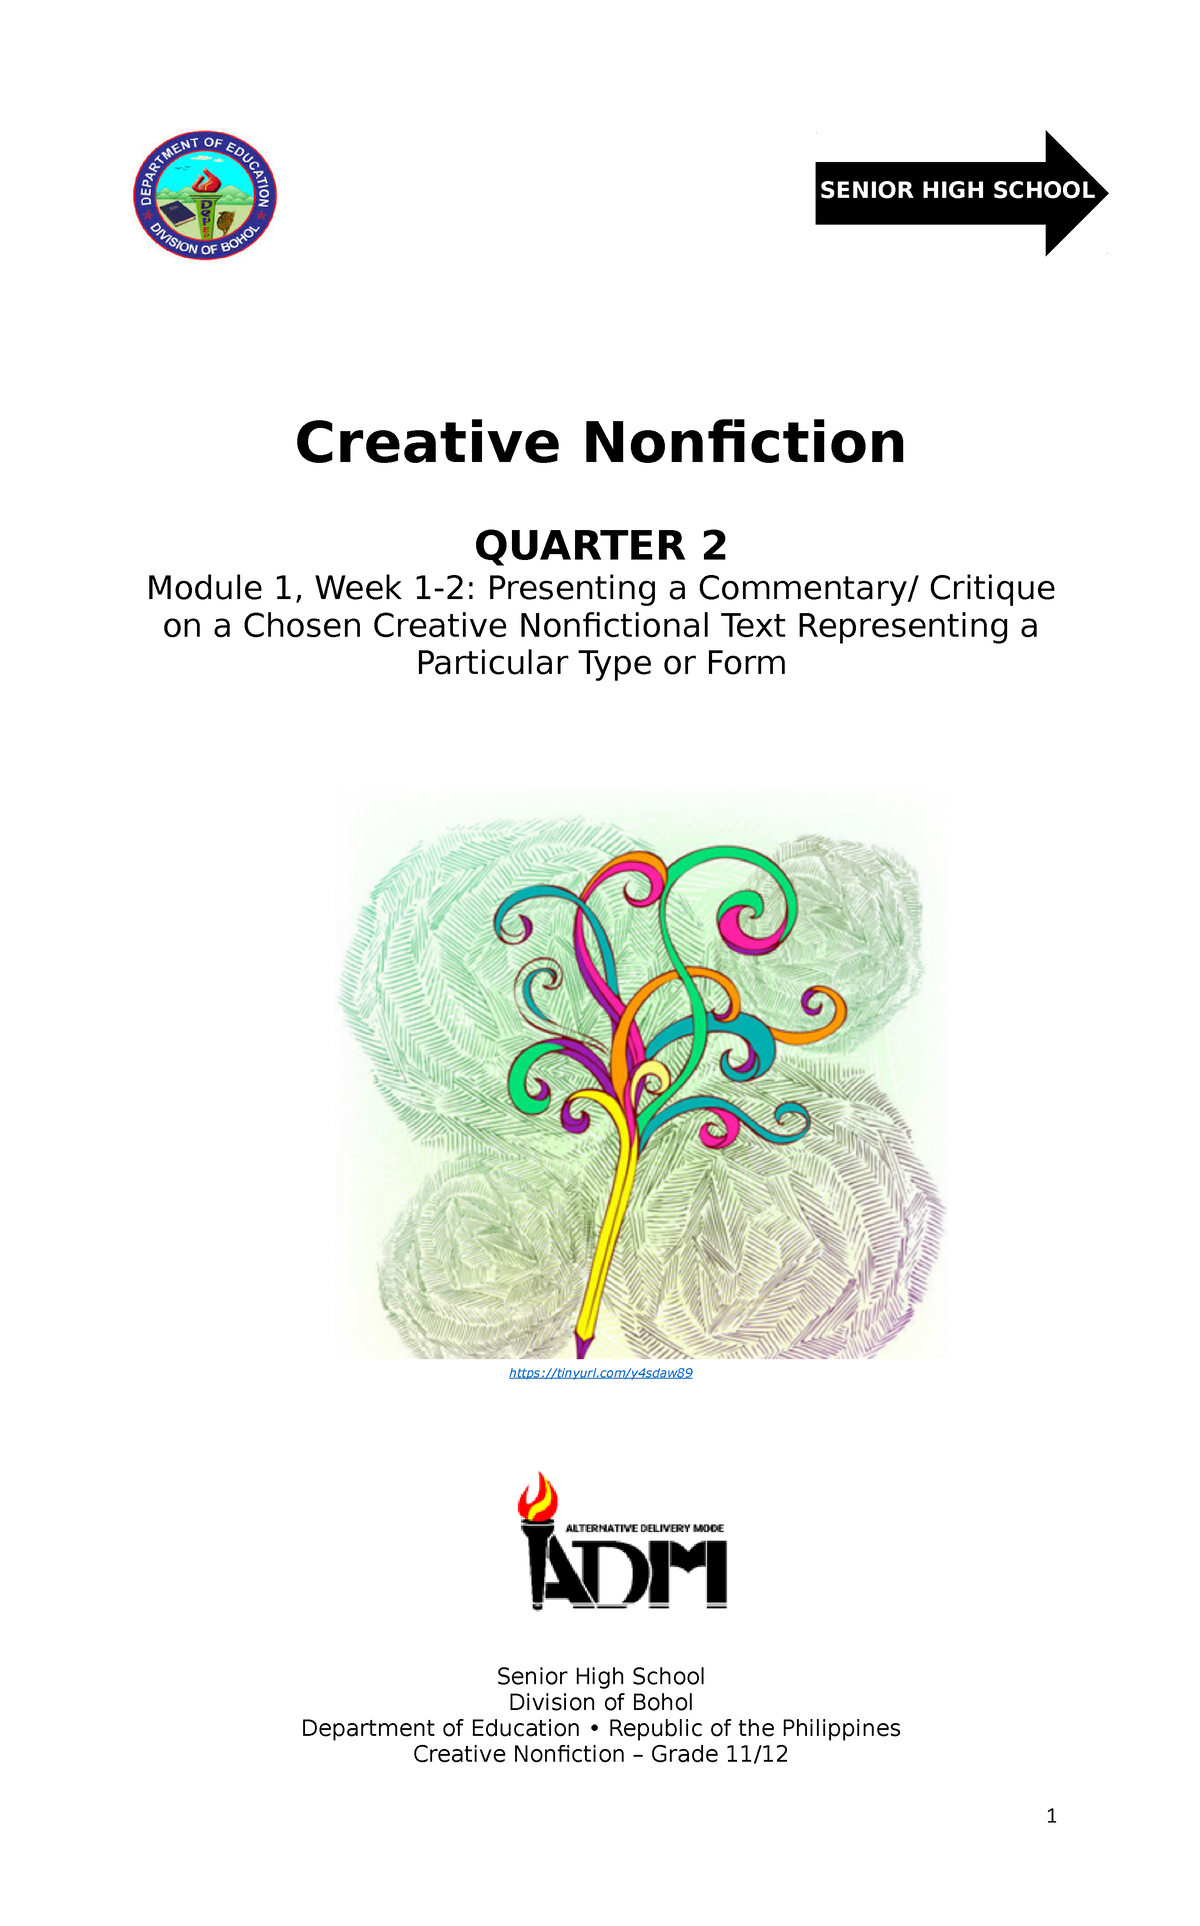 Shs Creative Non Fiction Module Q2 Wk1 2 Creative Nonfiction Quarter